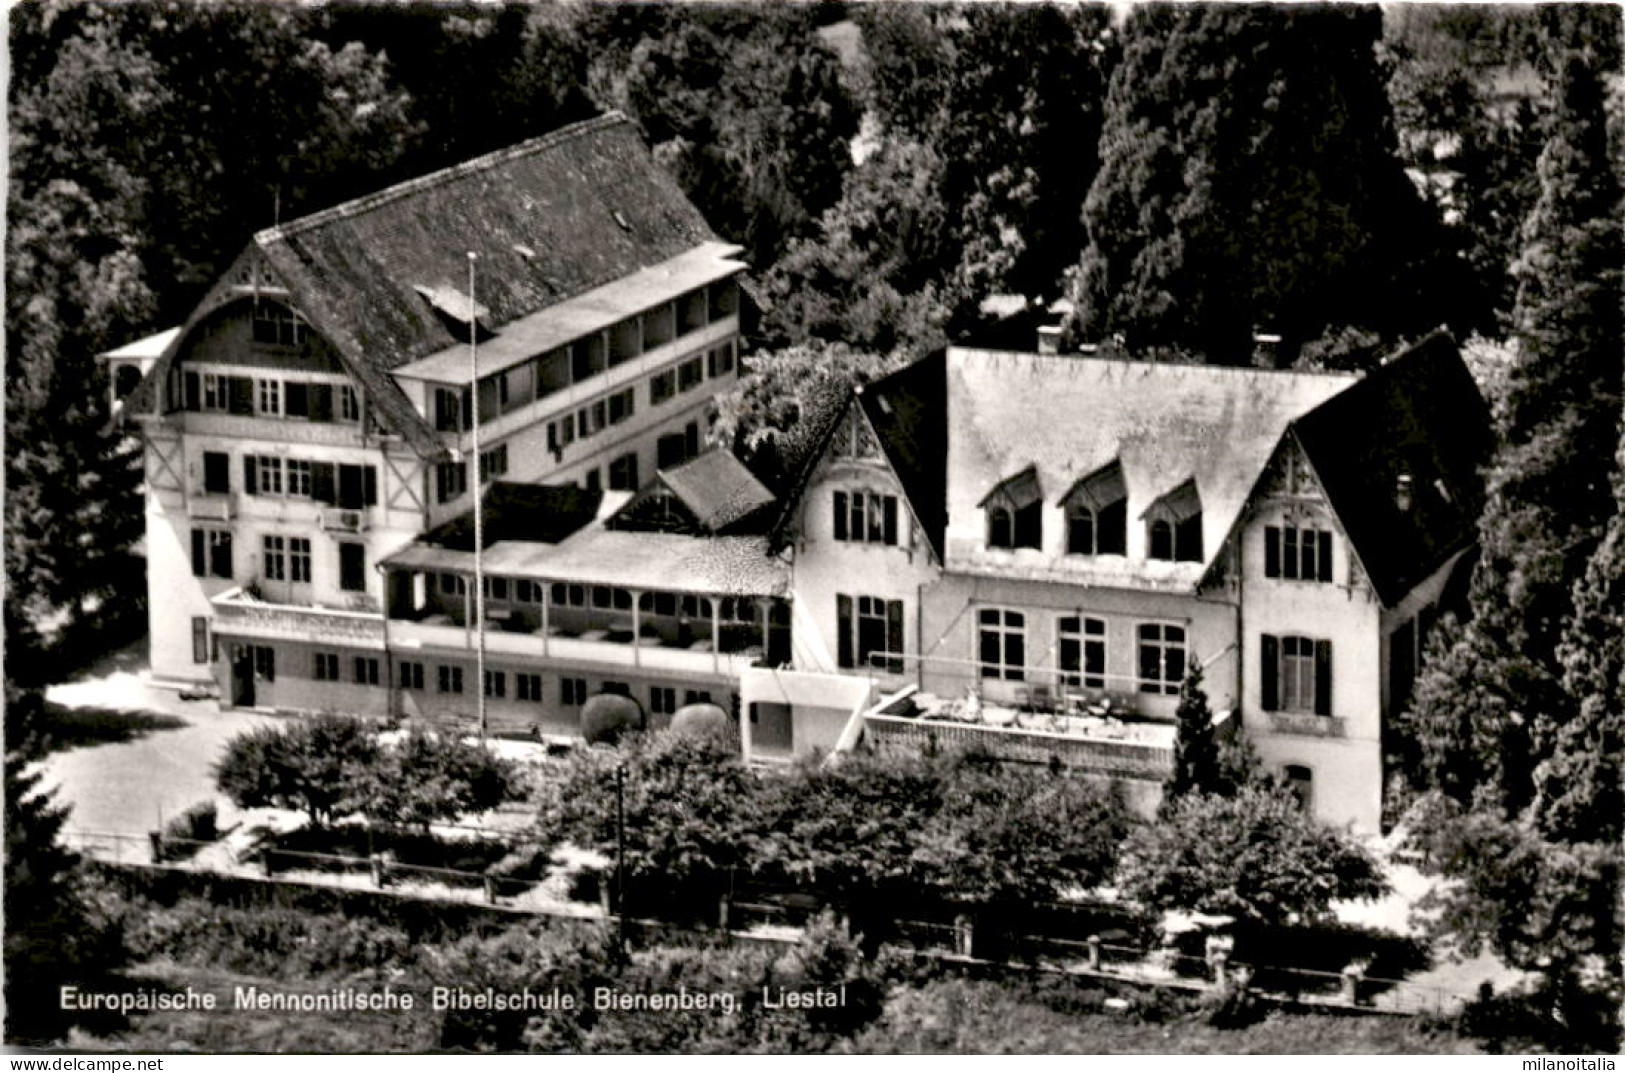 Europäische Mennonitische Bibelschule Bienenberg, Liestal (09913) * 25. 1. 1966 - Liestal